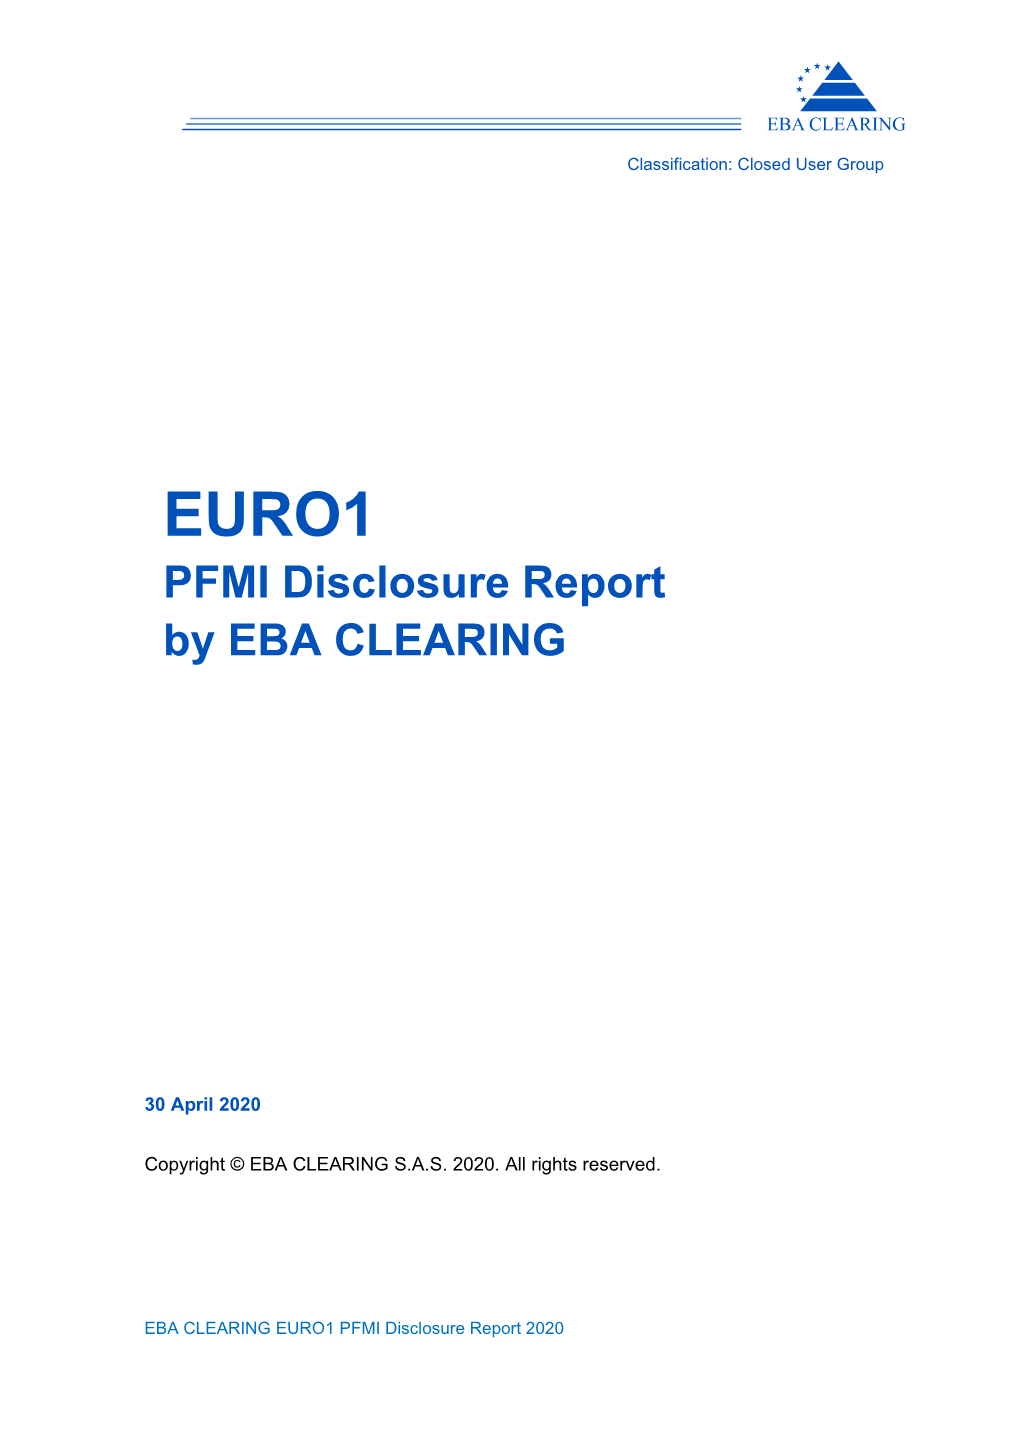 EURO1 PFMI Disclosure Report by EBA CLEARING